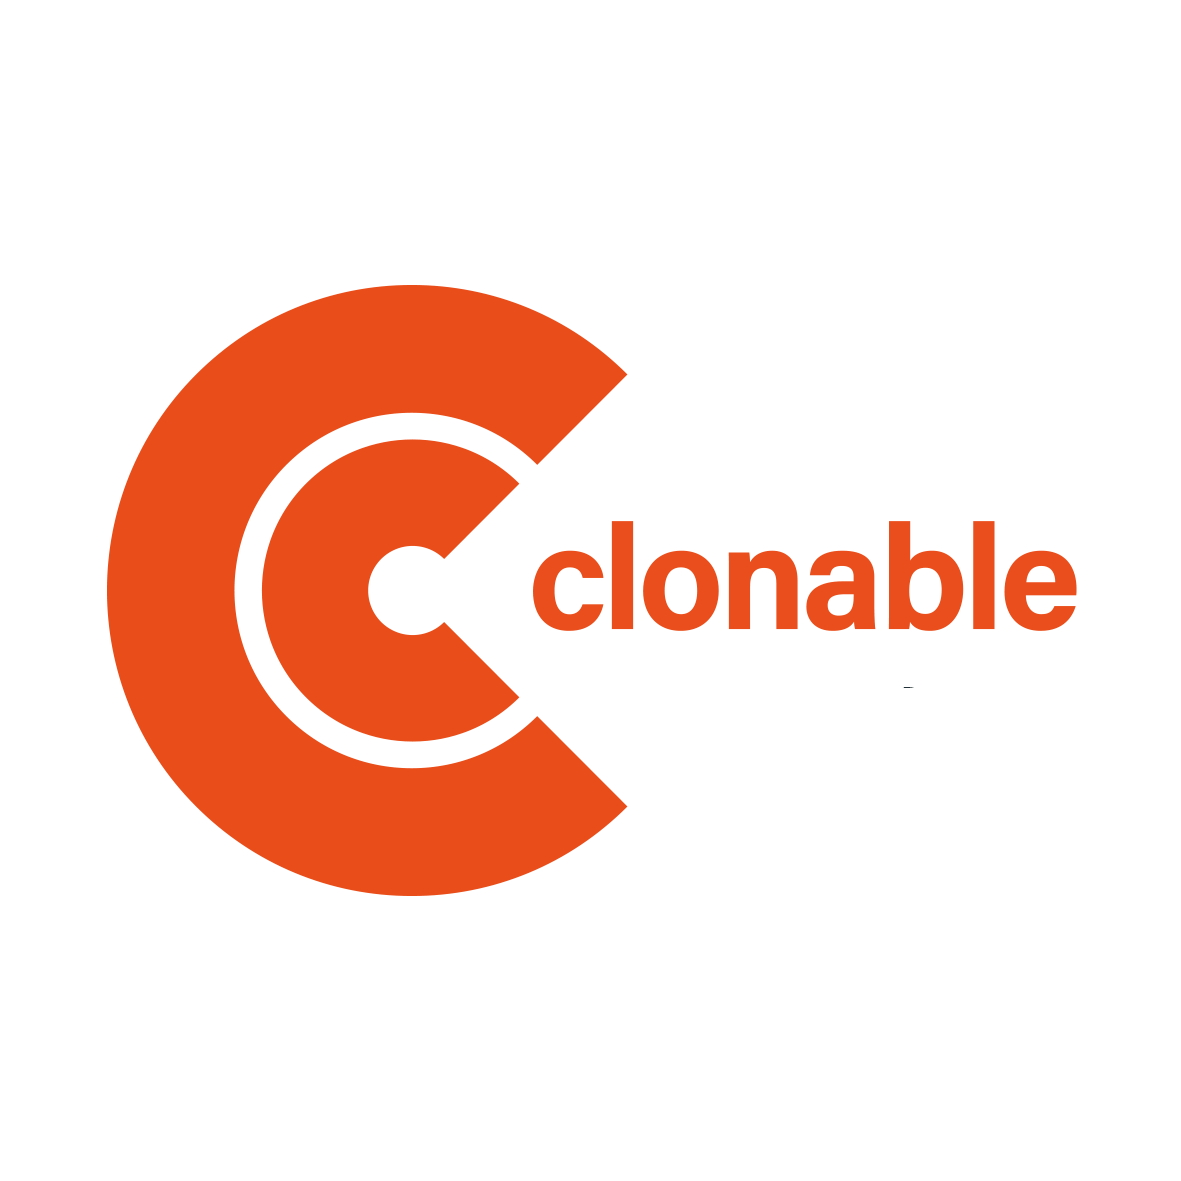 Clonable logo light background